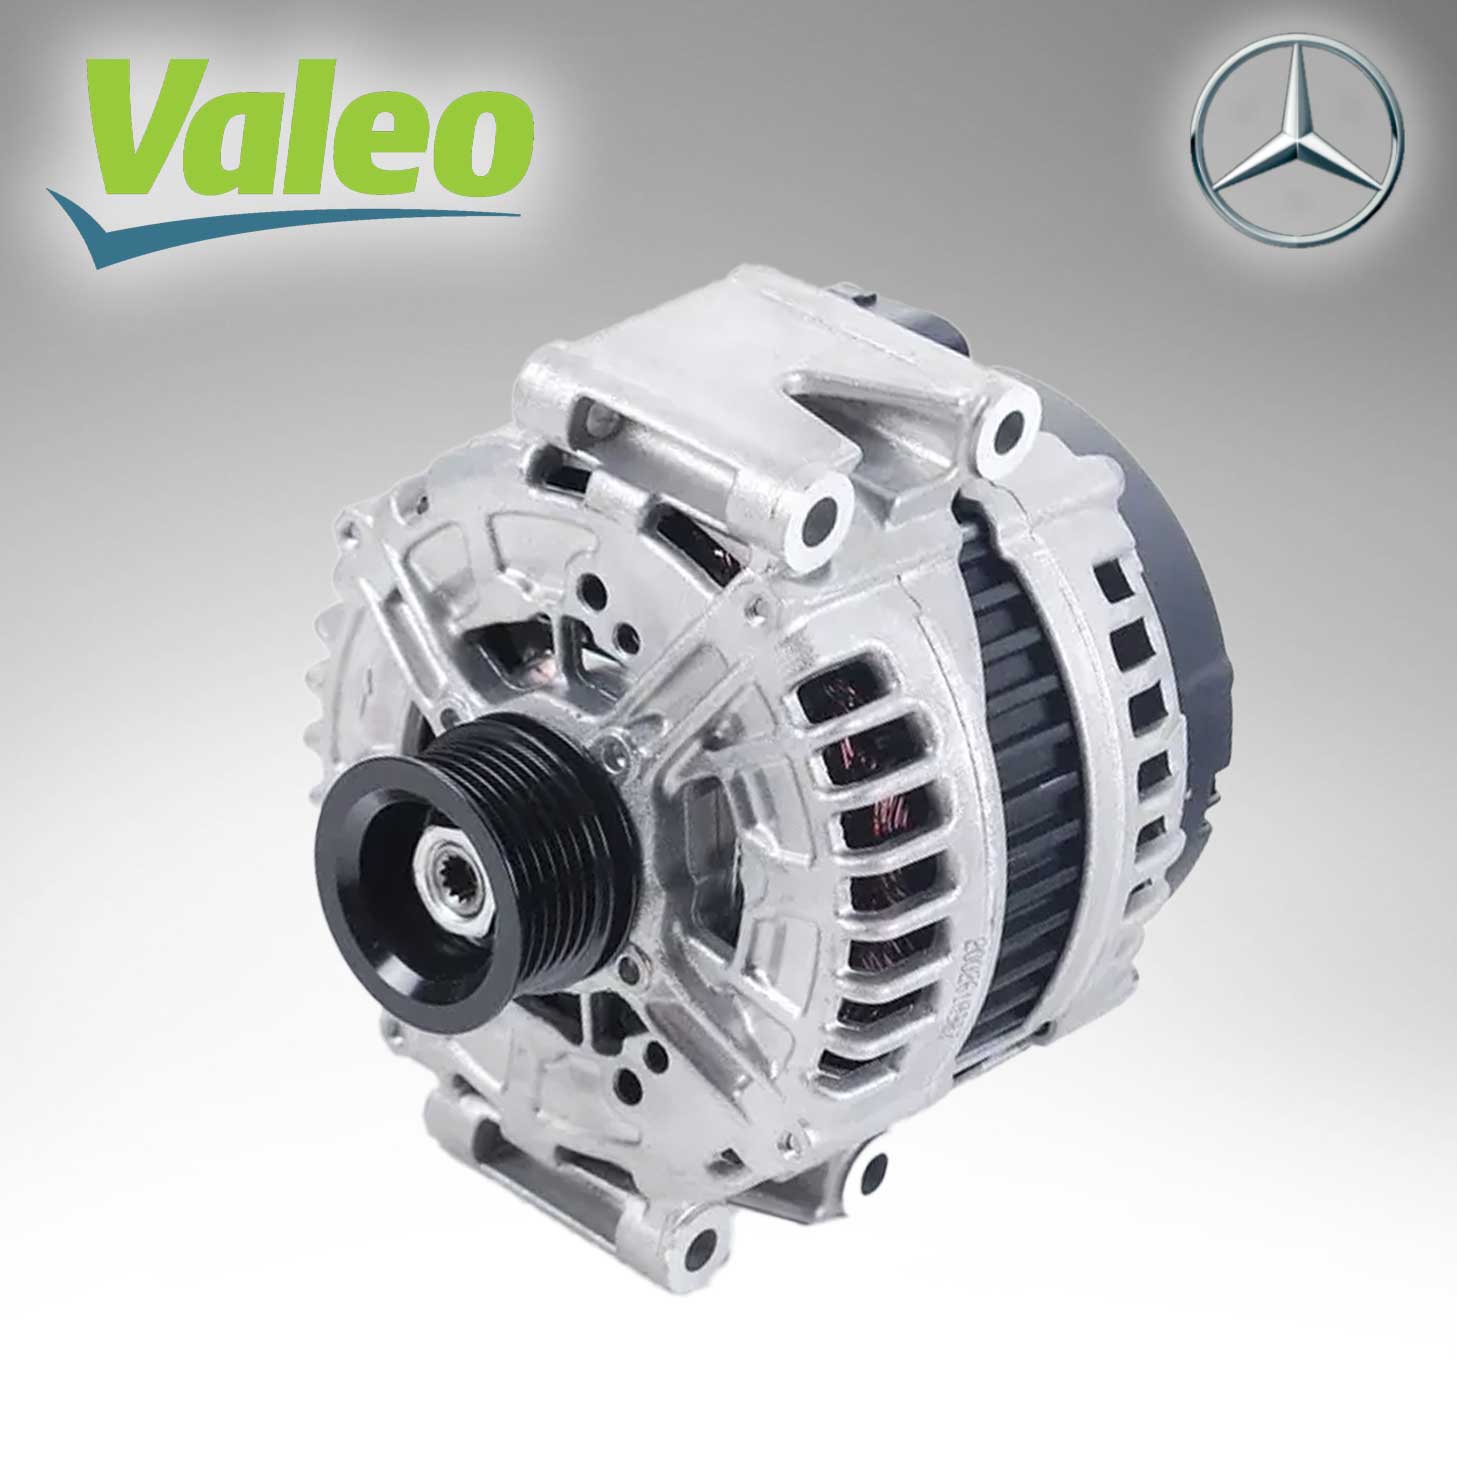 VALEO ALTERNATOR (VALEO # 443270) For Mercedes Benz W216 CL550 S550. 220 AMP 0131540502